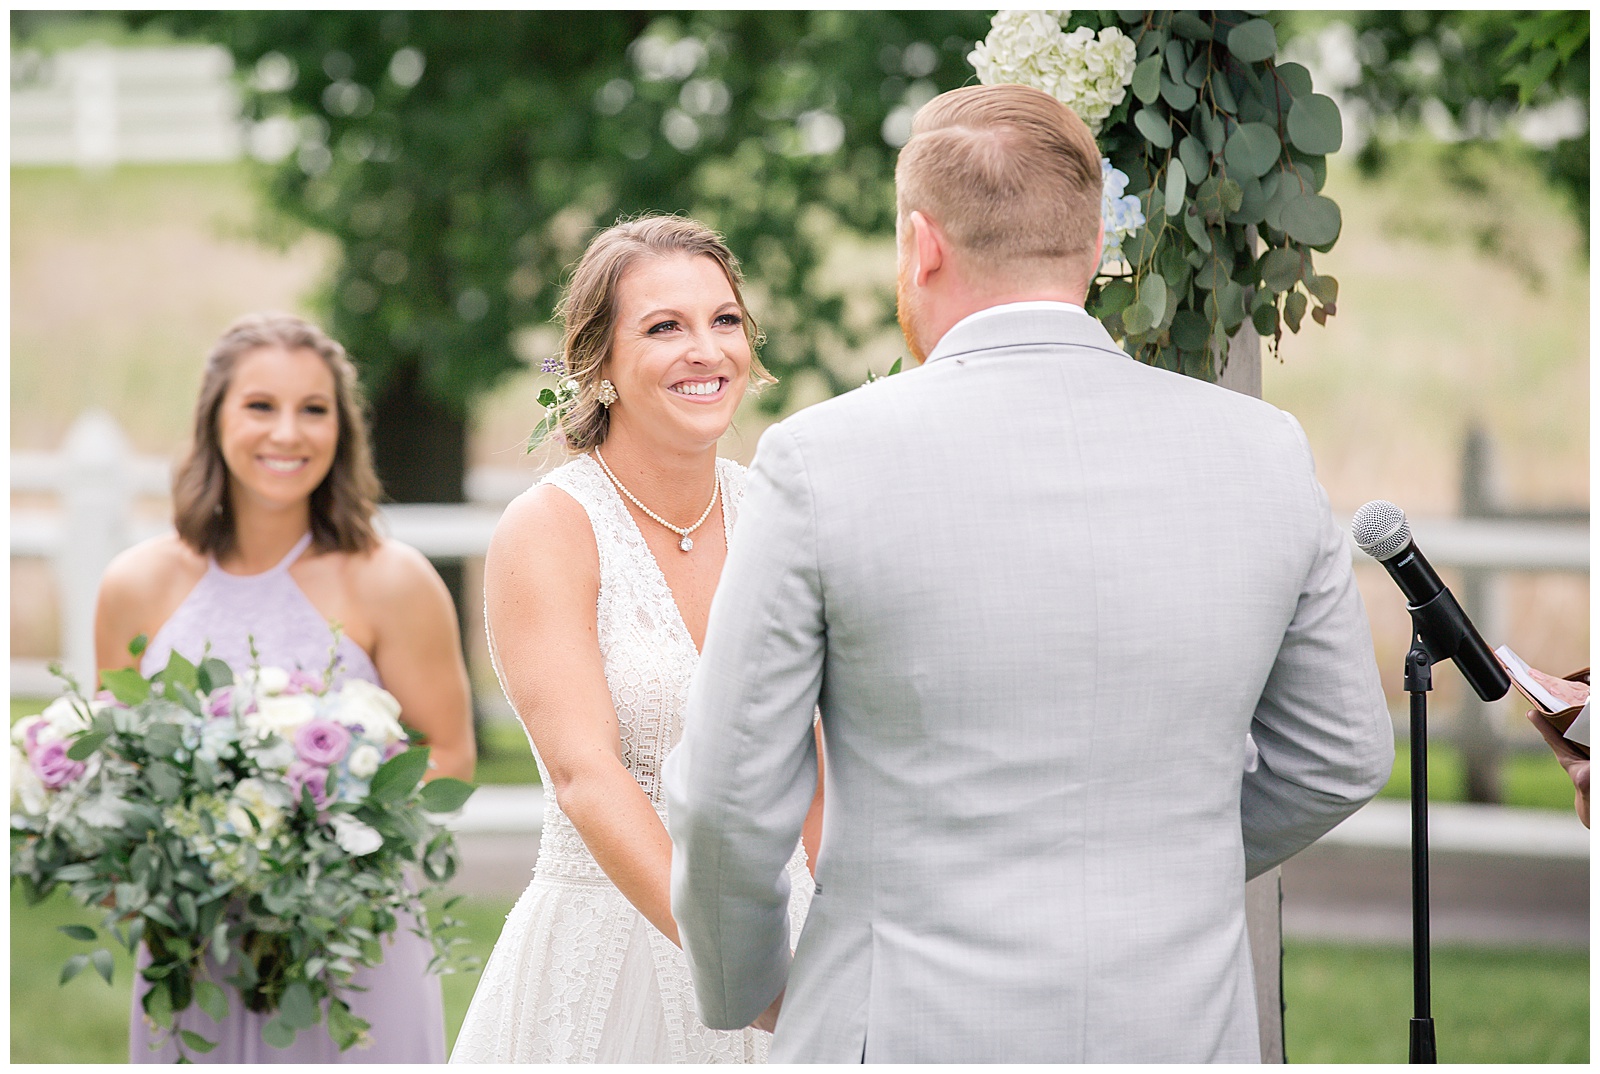 Wedding photography and videography at Executive Hills Polo Club by Kansas City wedding photographers Wisdom-Watson Weddings.